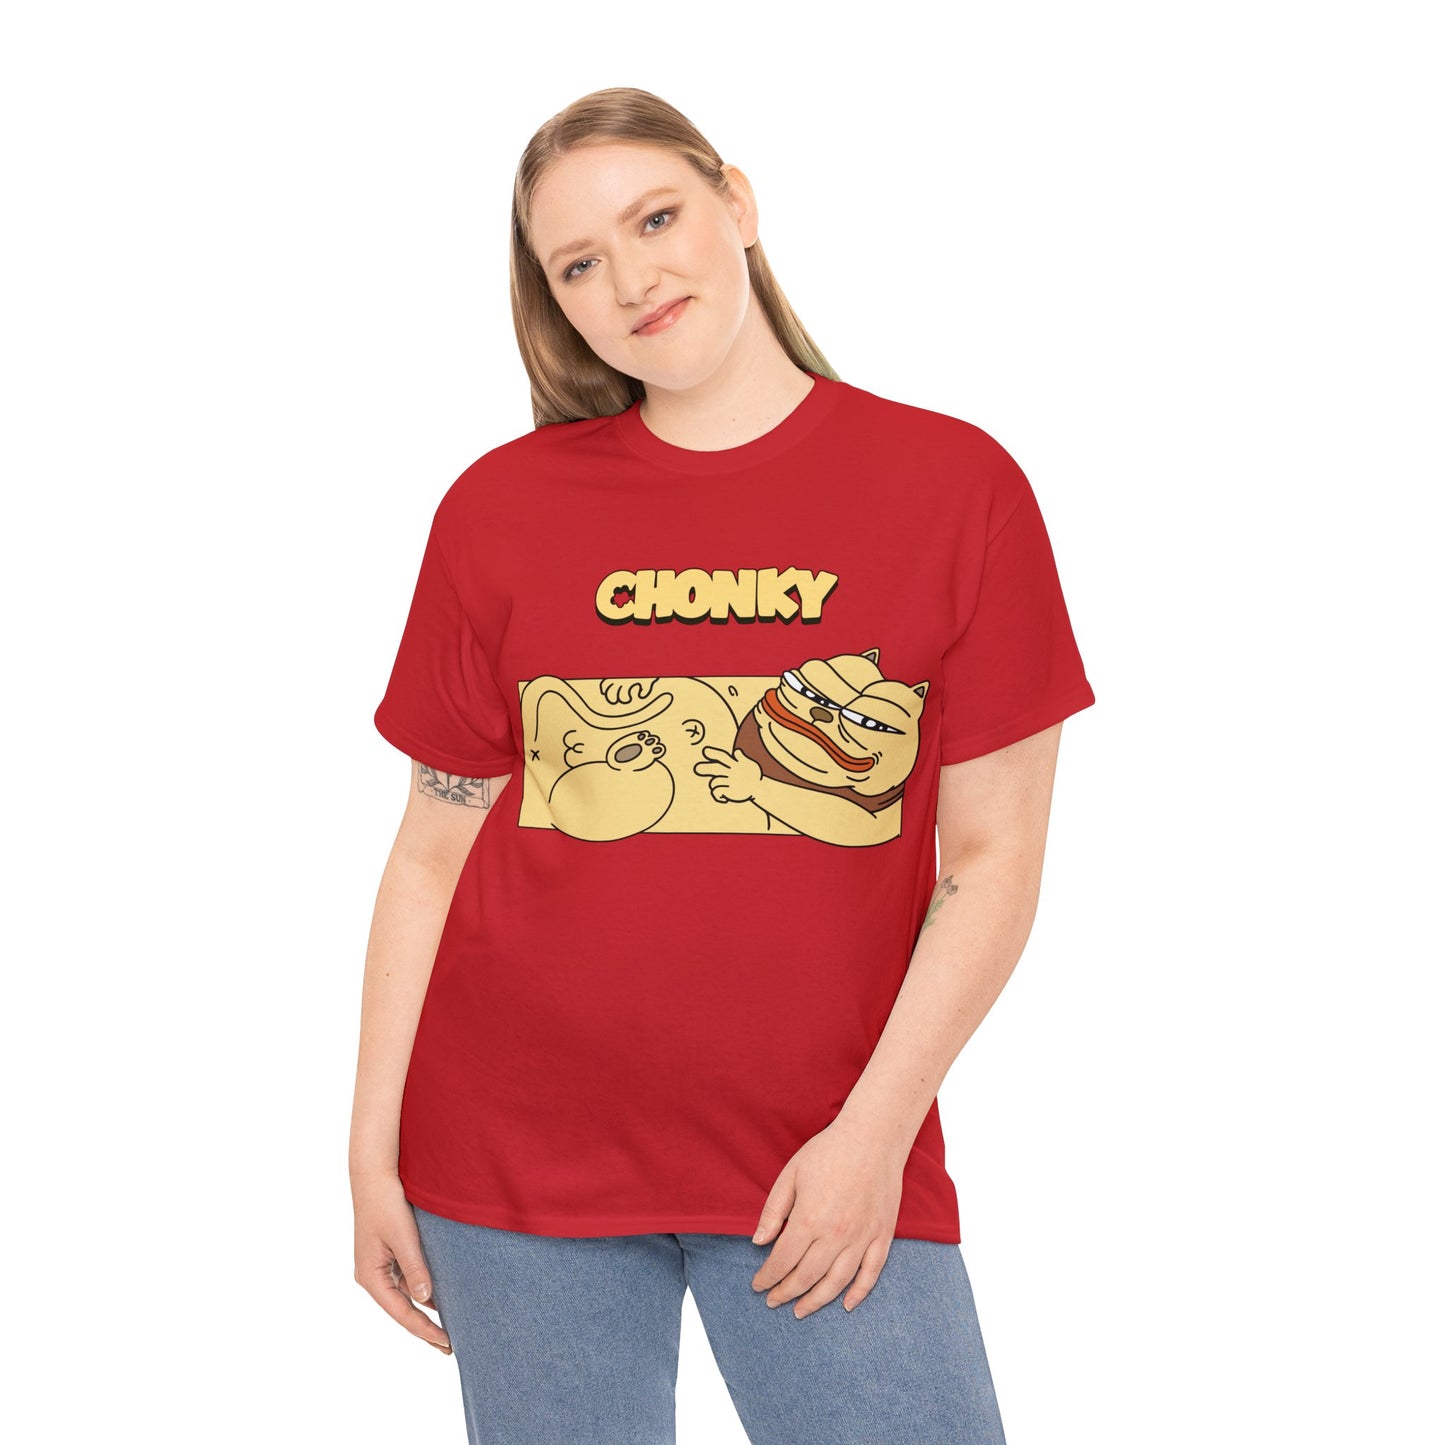 CHONKY Unisex Fat Cotton T-Shirt